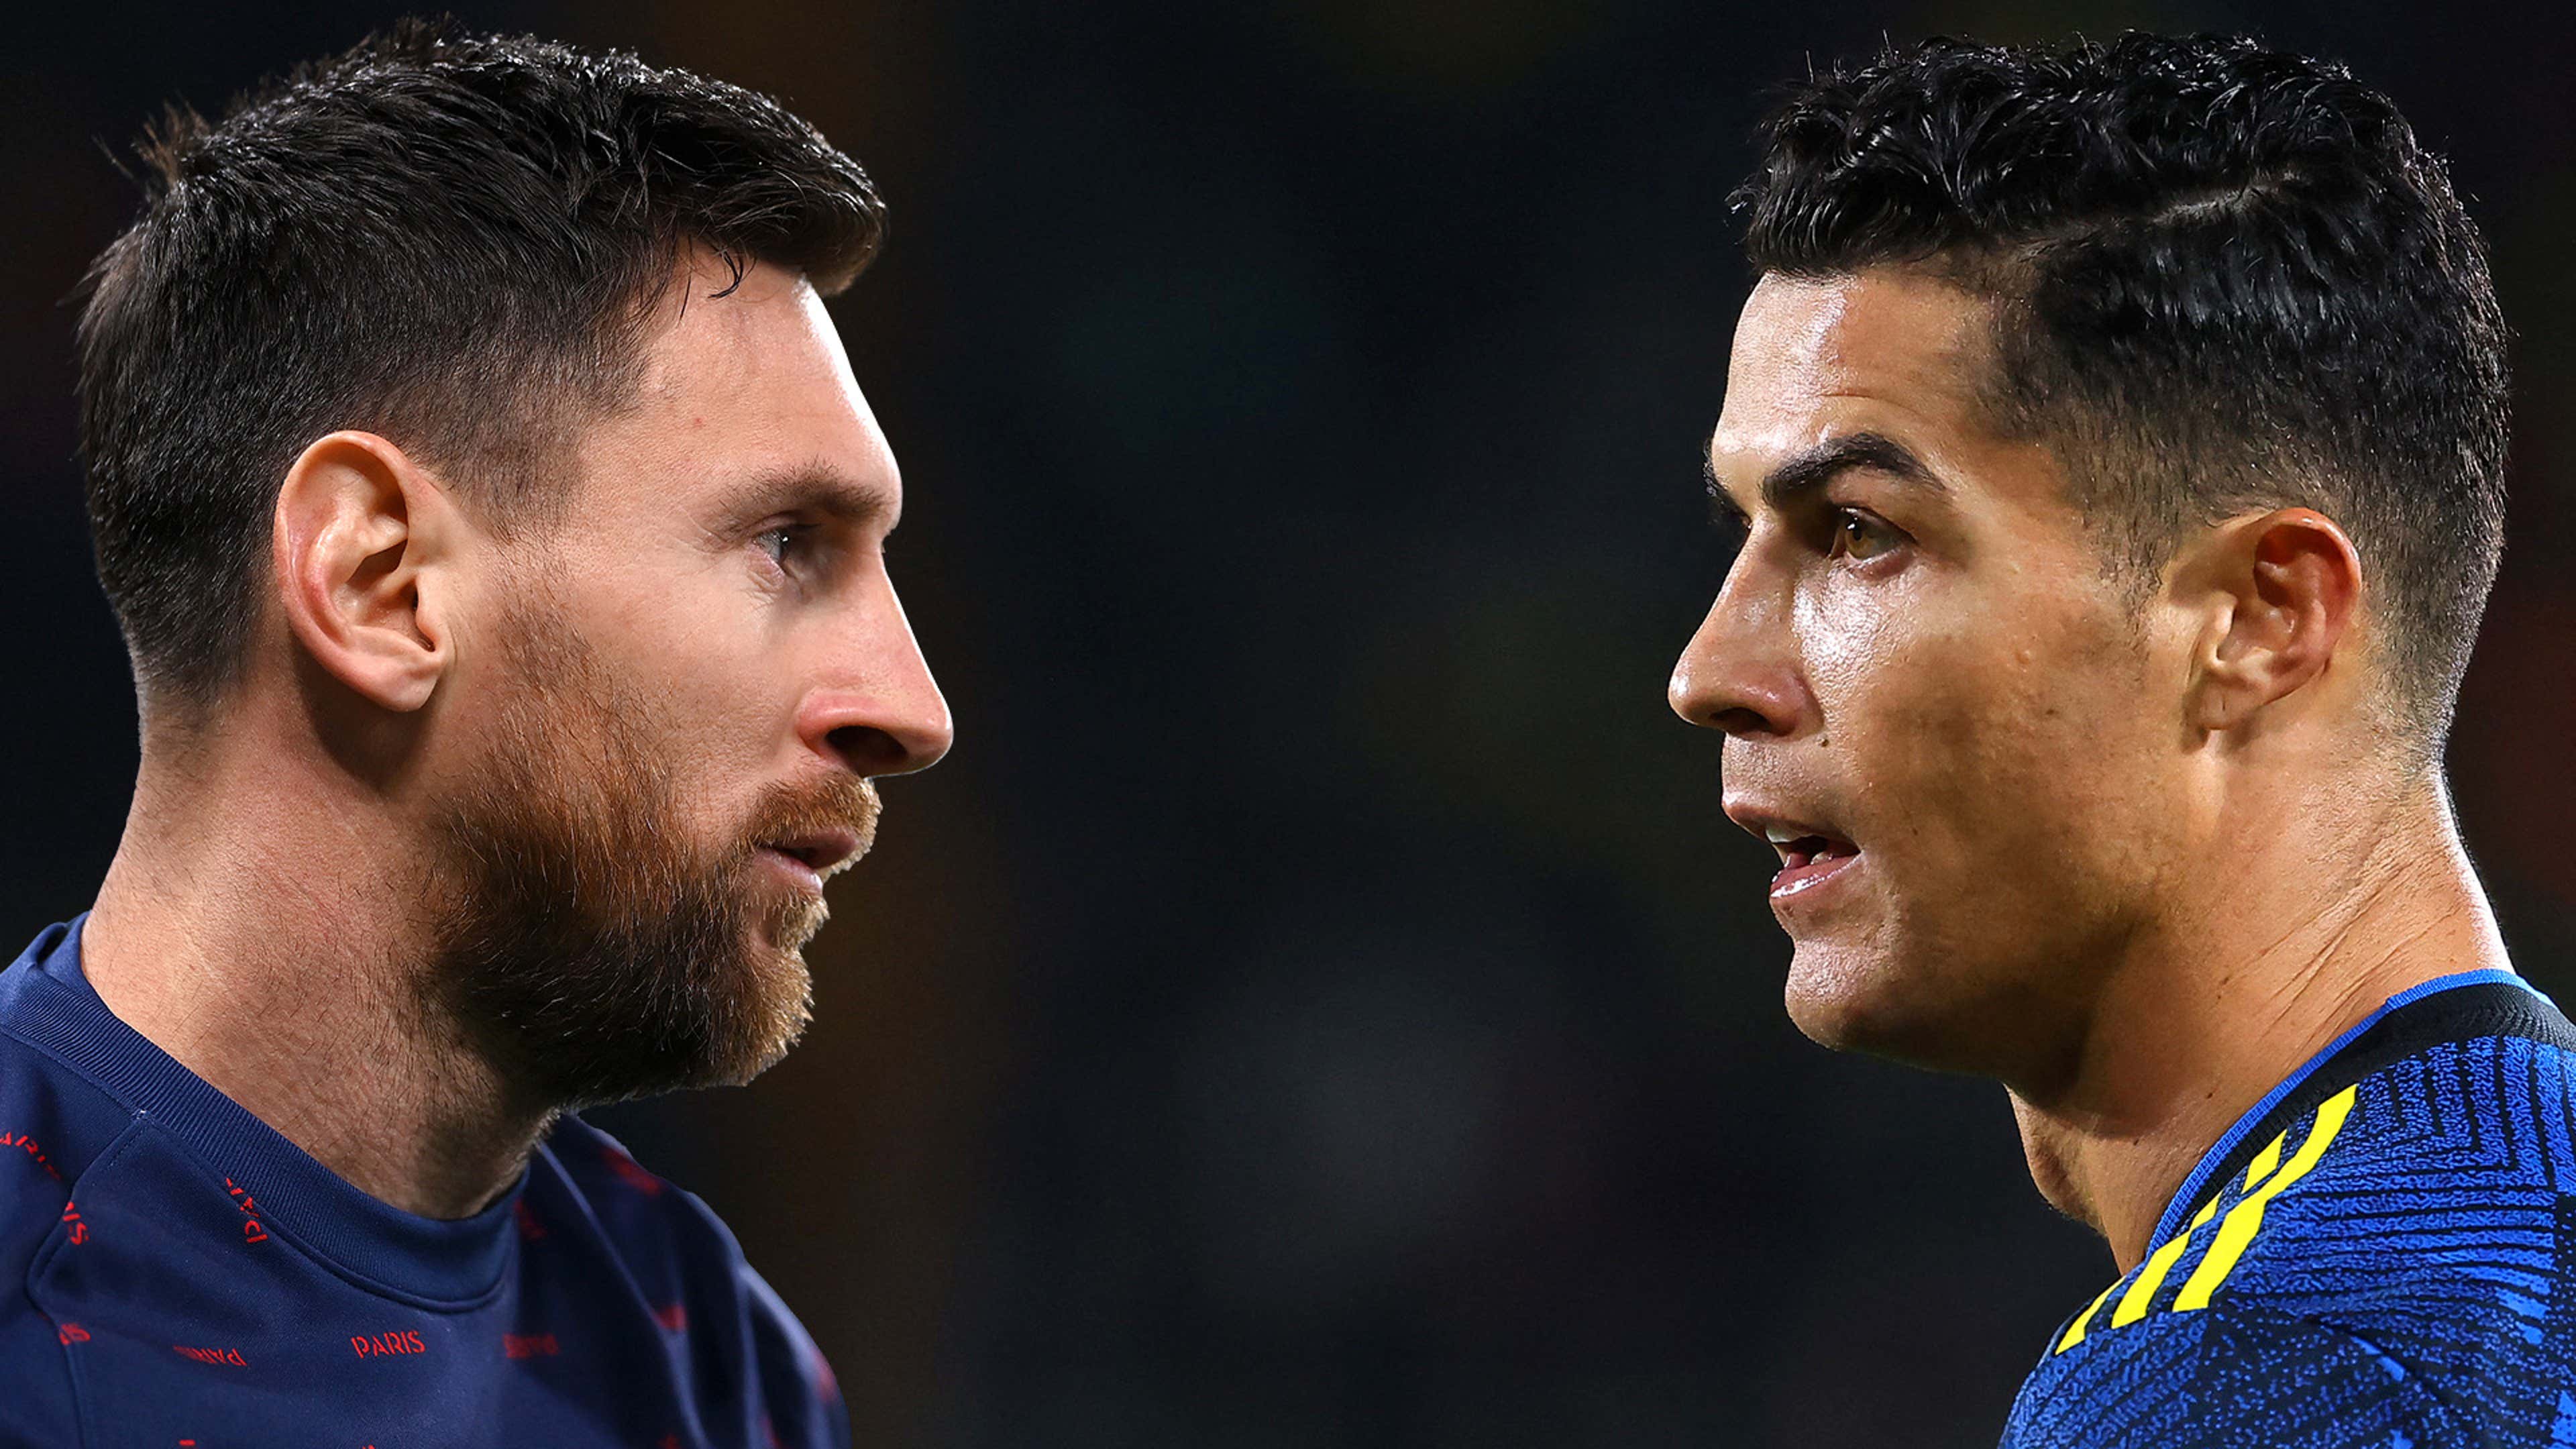 FIFA 21 player ratings: Lionel Messi surpasses Cristiano Ronaldo in top 100